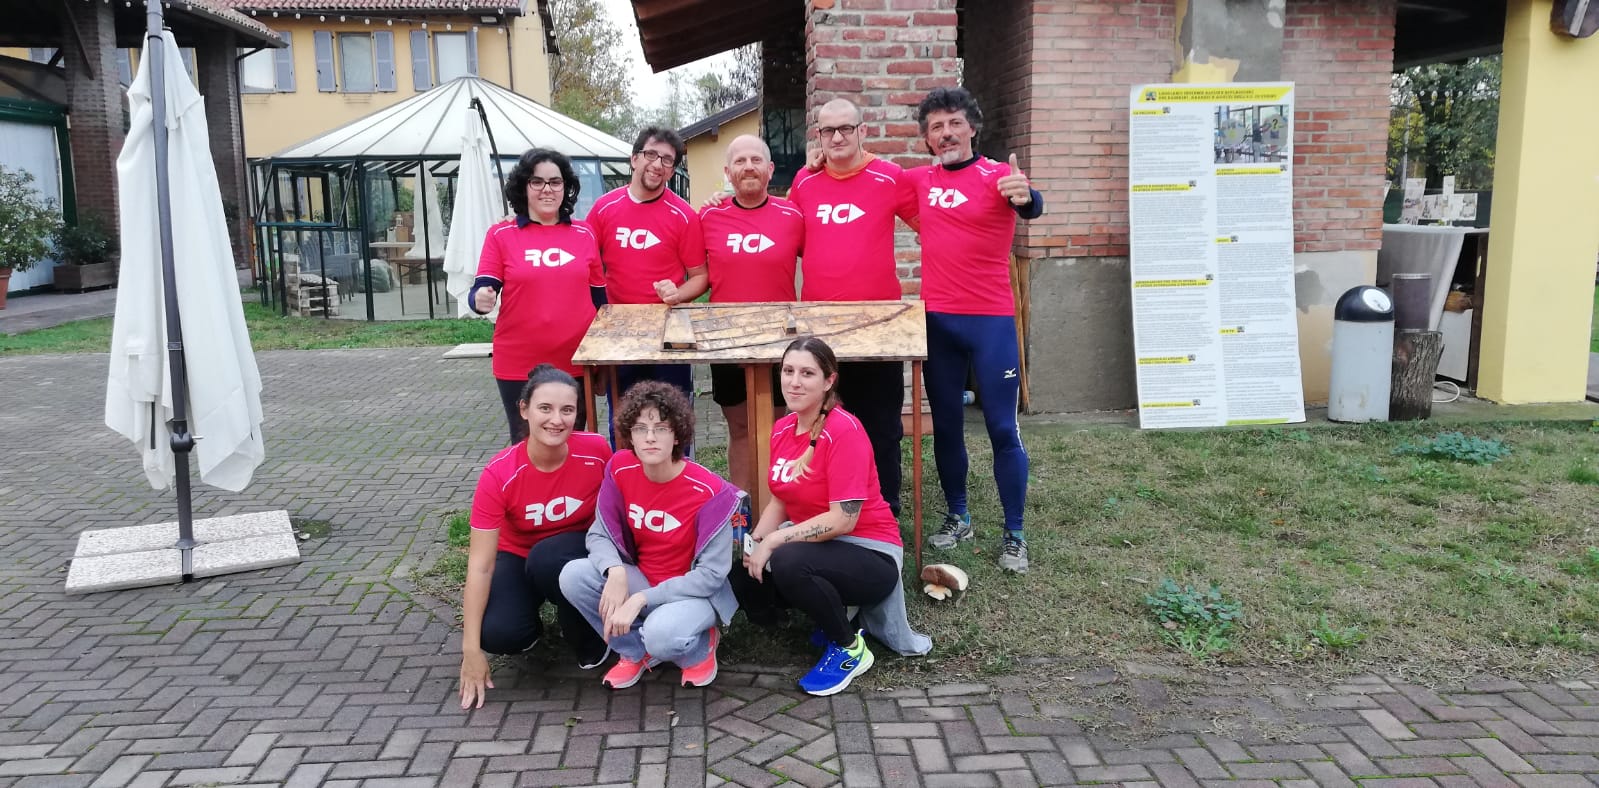 Atlha Onlus verso Milano Marathon 2019-Veronica Luccherini